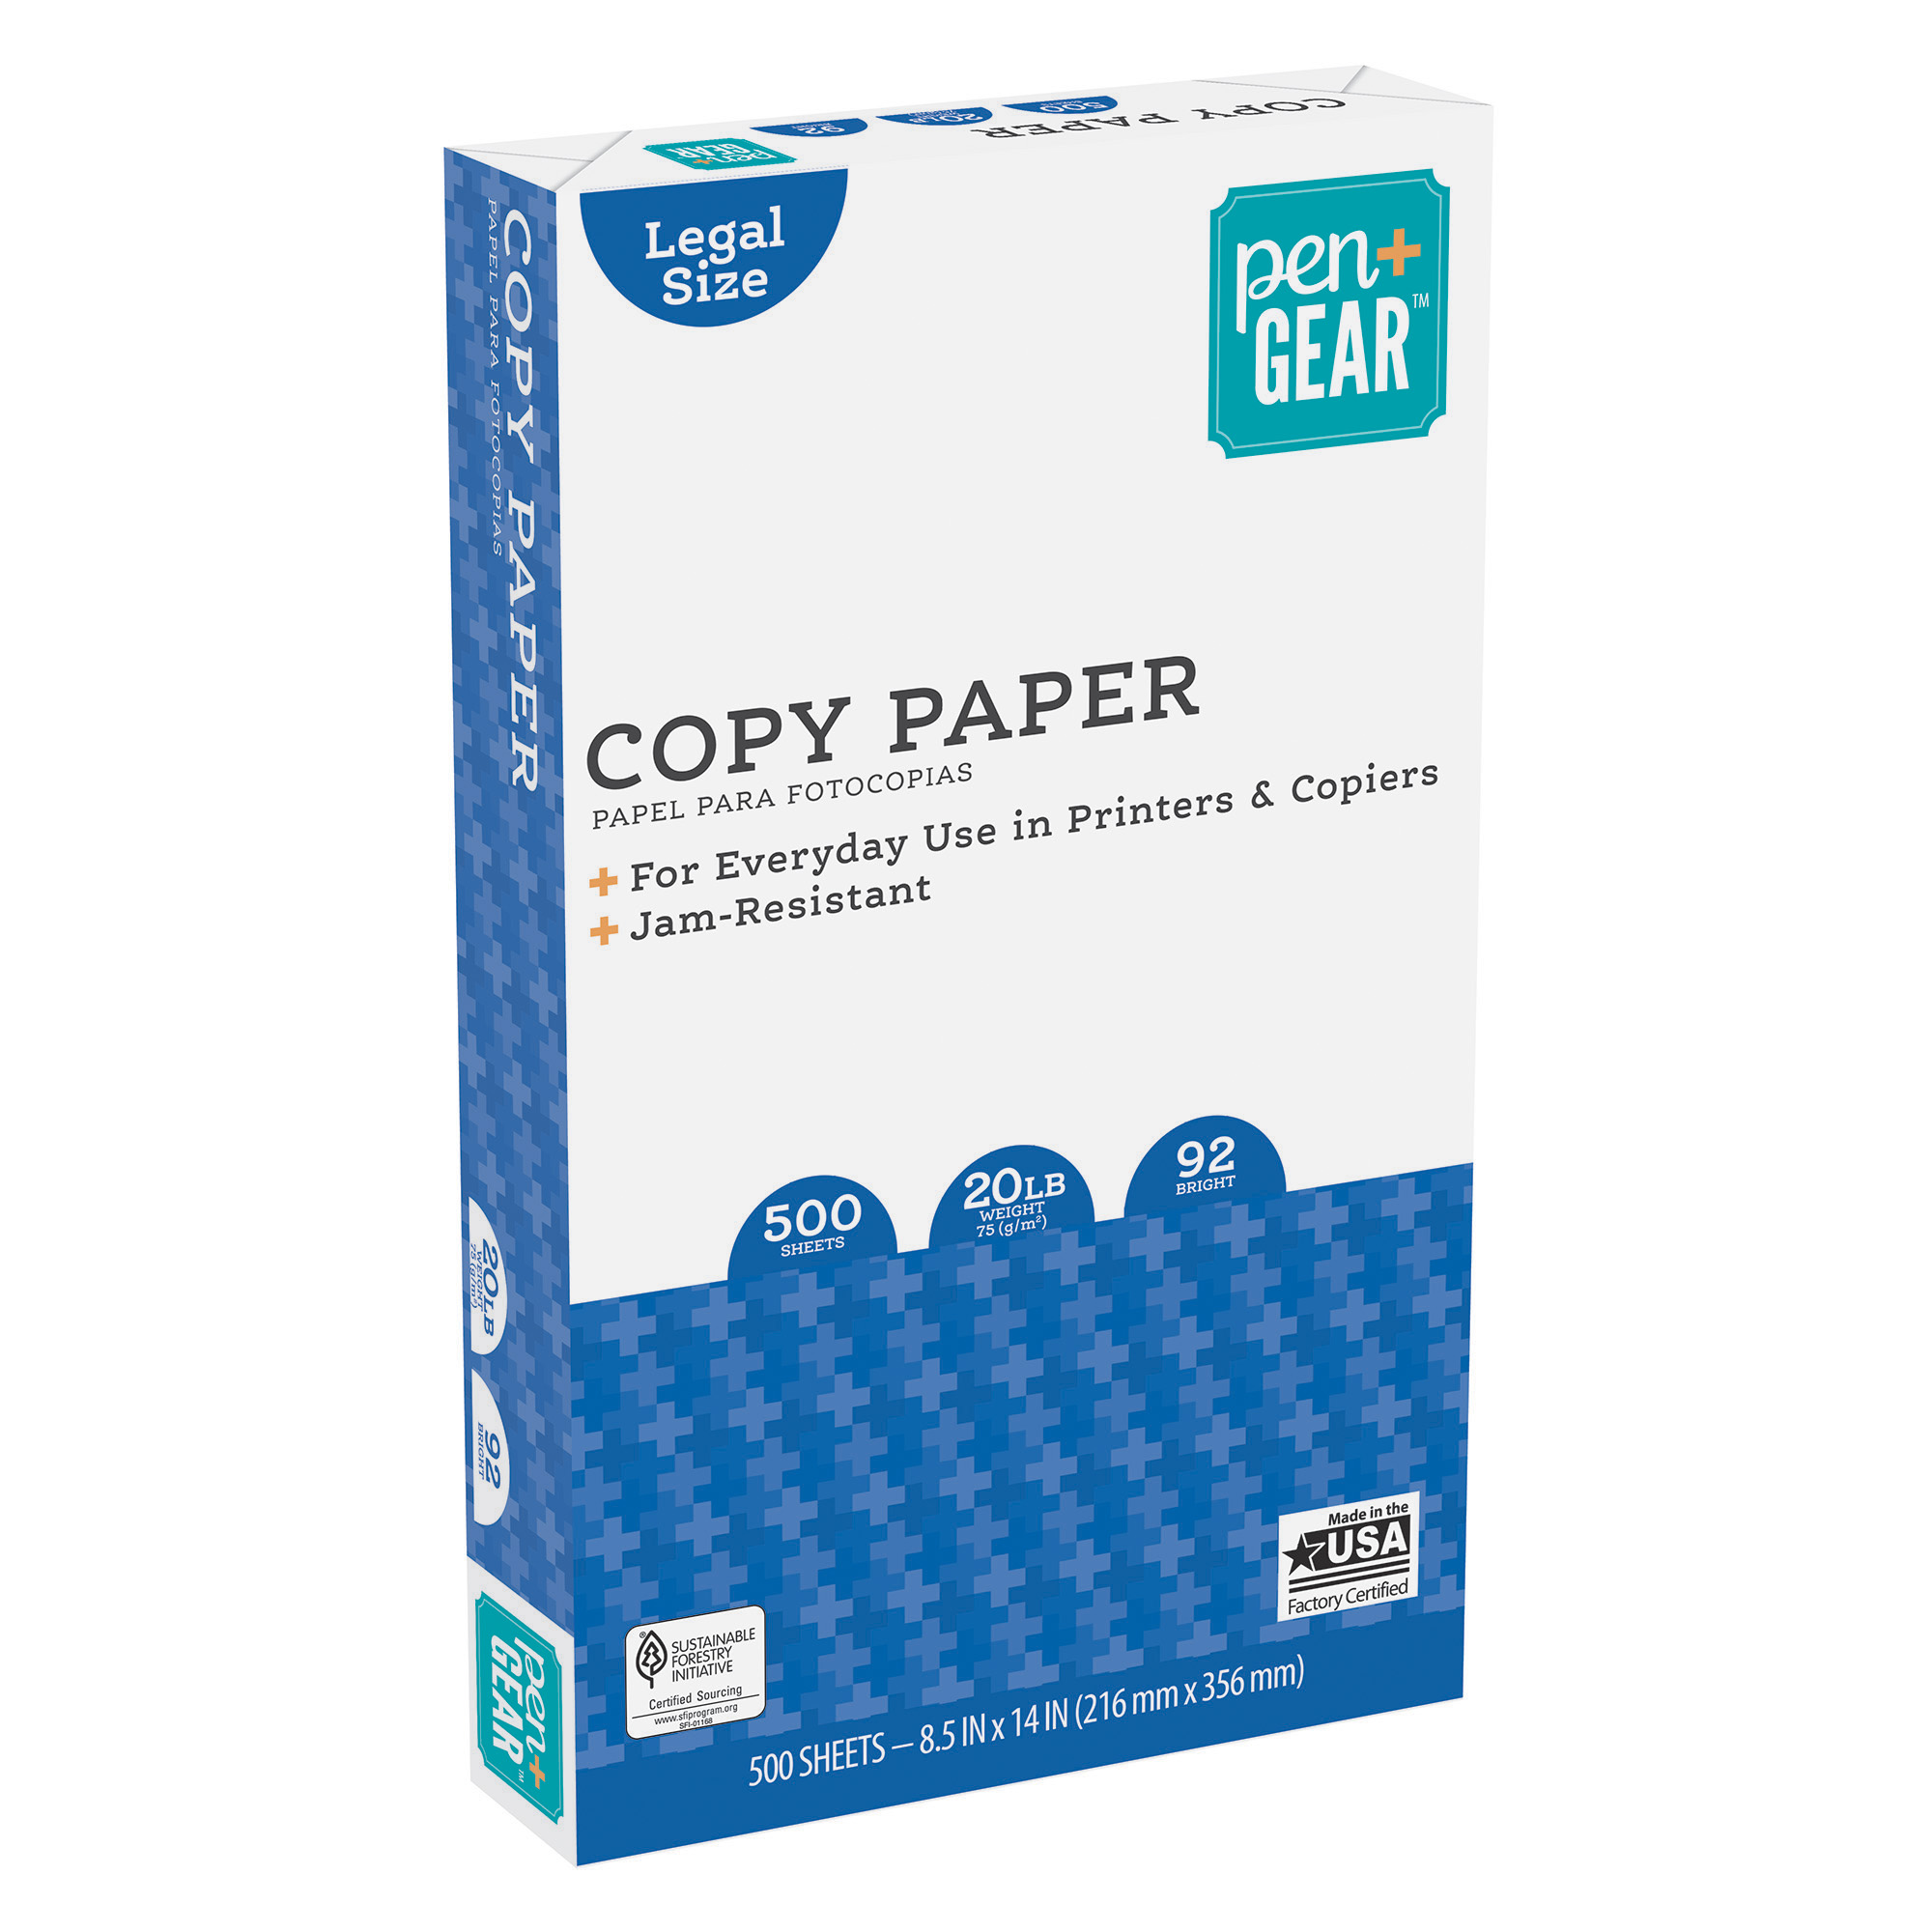 Pen+Gear Copy Paper, 8.5" x 14", Legal Size, 92 Bright, White, 20 lb., 1 Ream (500 Sheets) - image 1 of 8